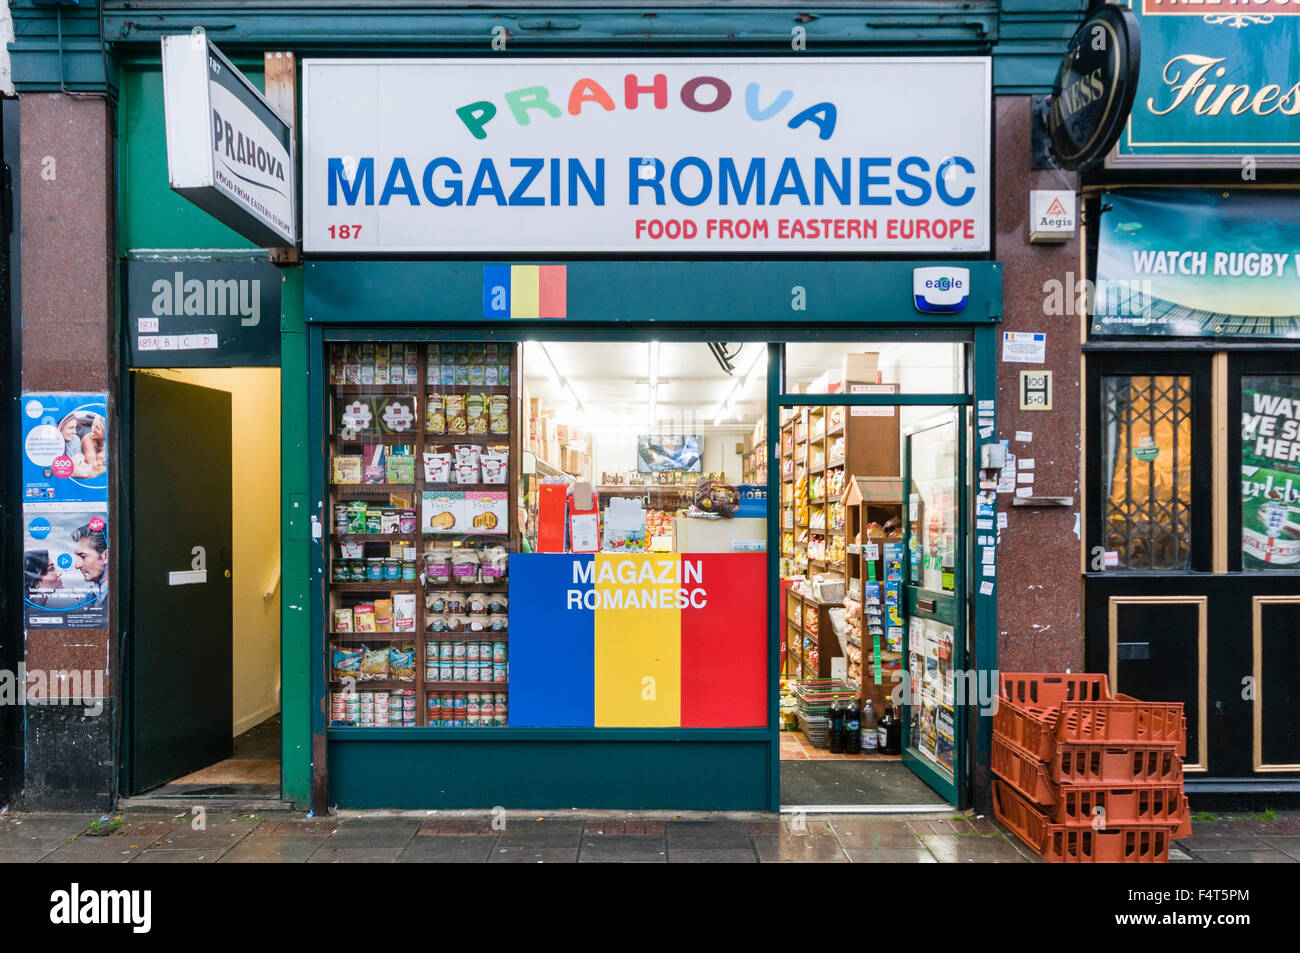 Prahova Romanian shop in West London Stock Photo